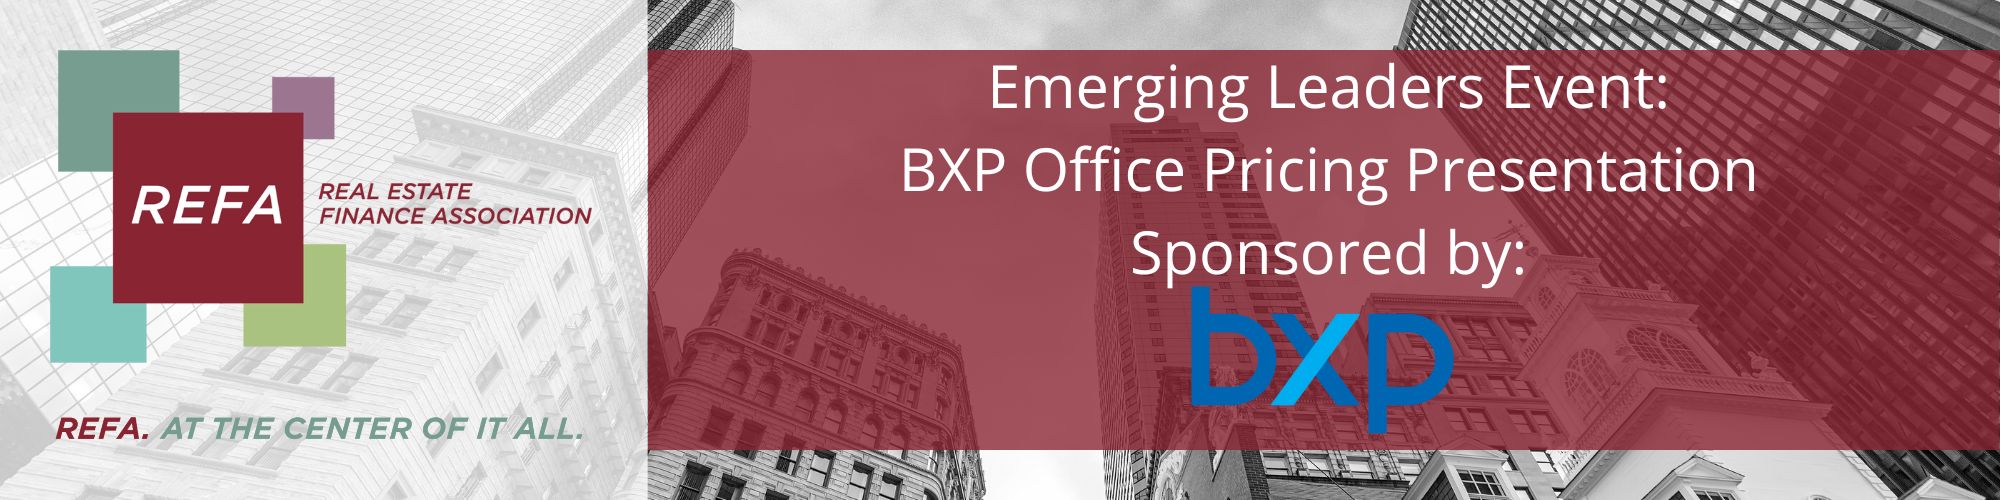 Emerging Leaders- BXP Office Pricing Presentation